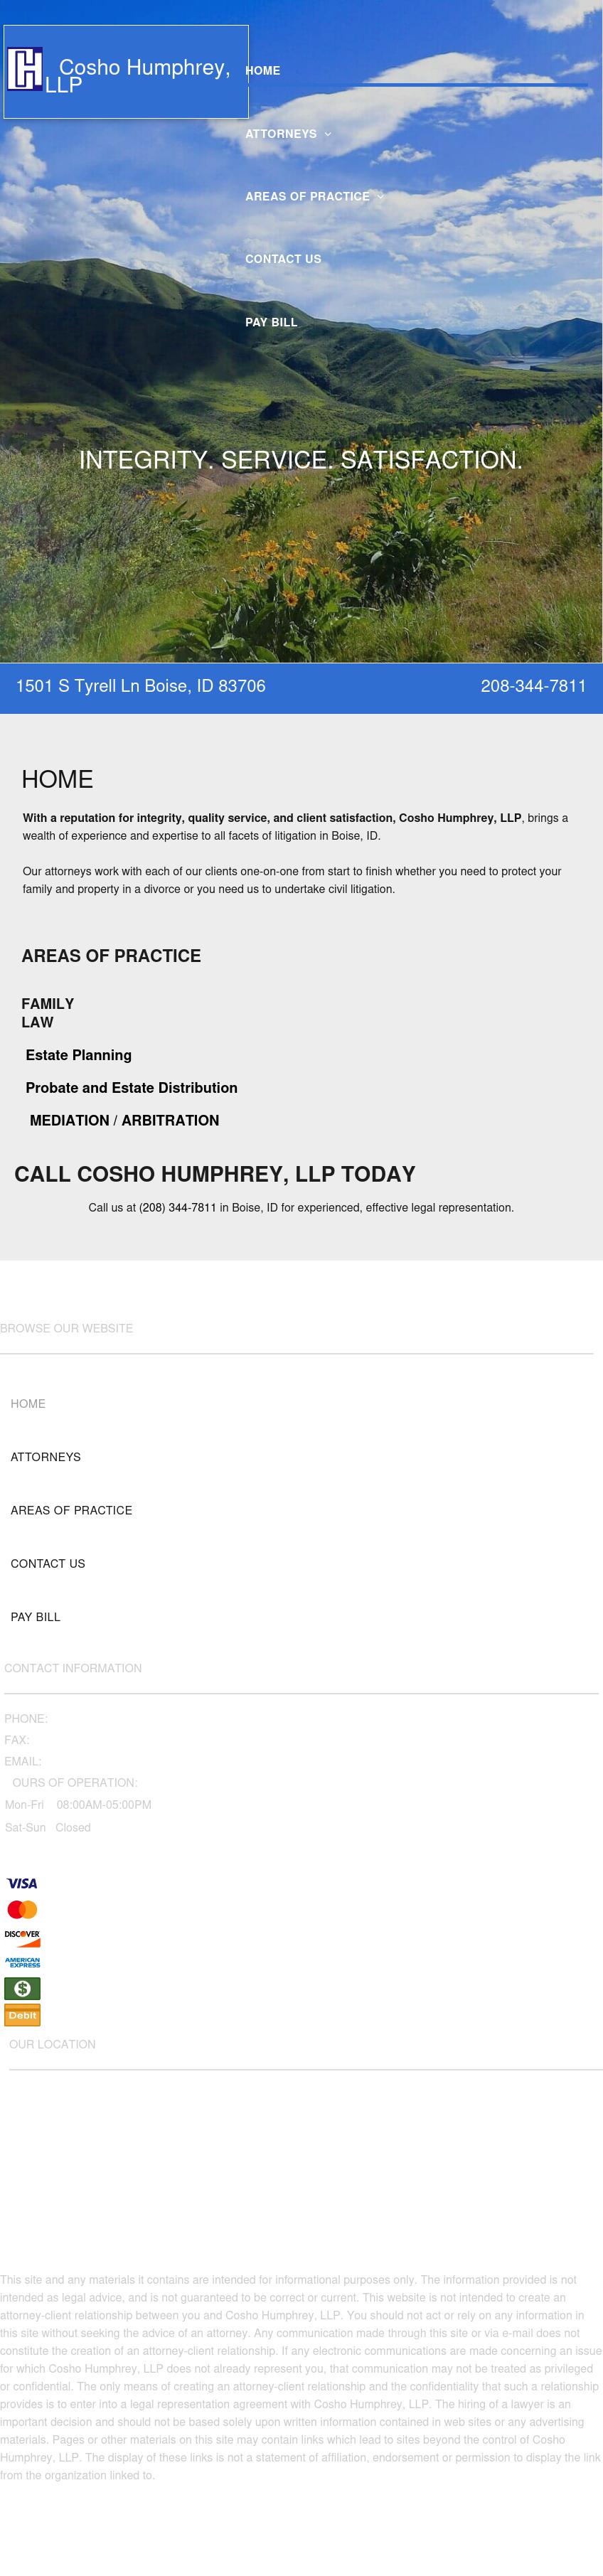 Cosho Humphrey LLP - Boise ID Lawyers